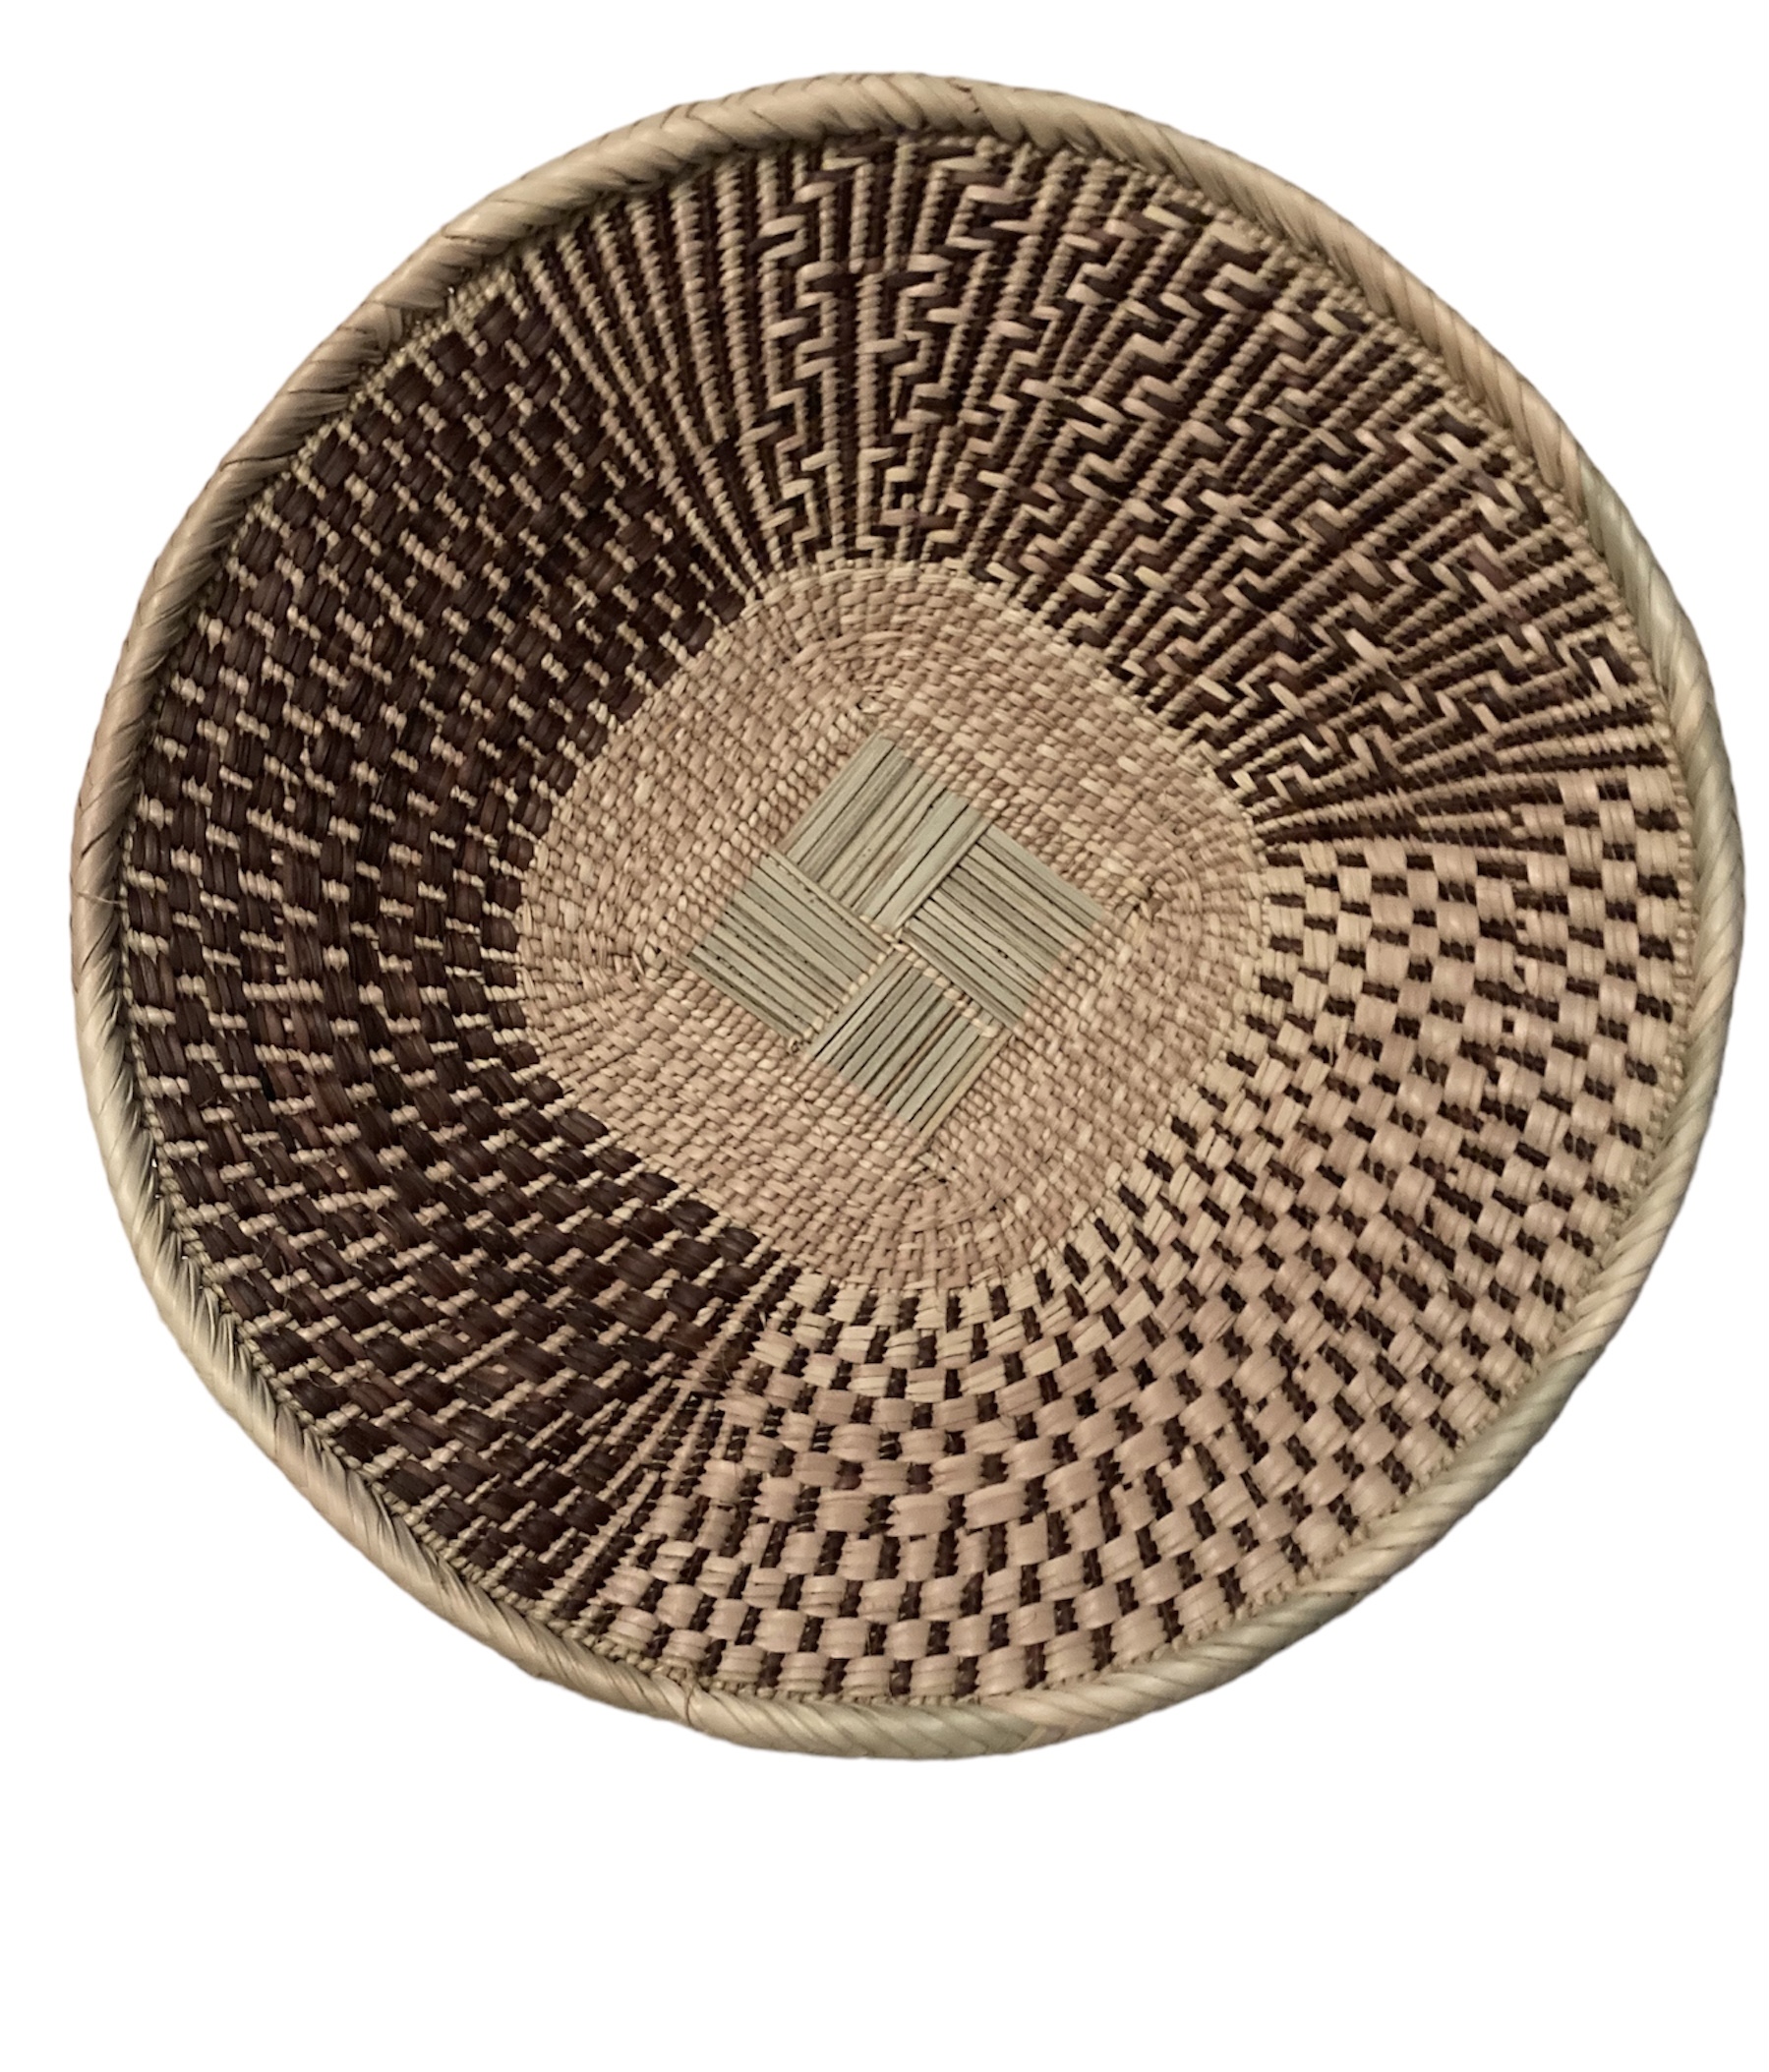 Tonga Basket from Zimbabwe - Design #002 - 13 1/2" dia.